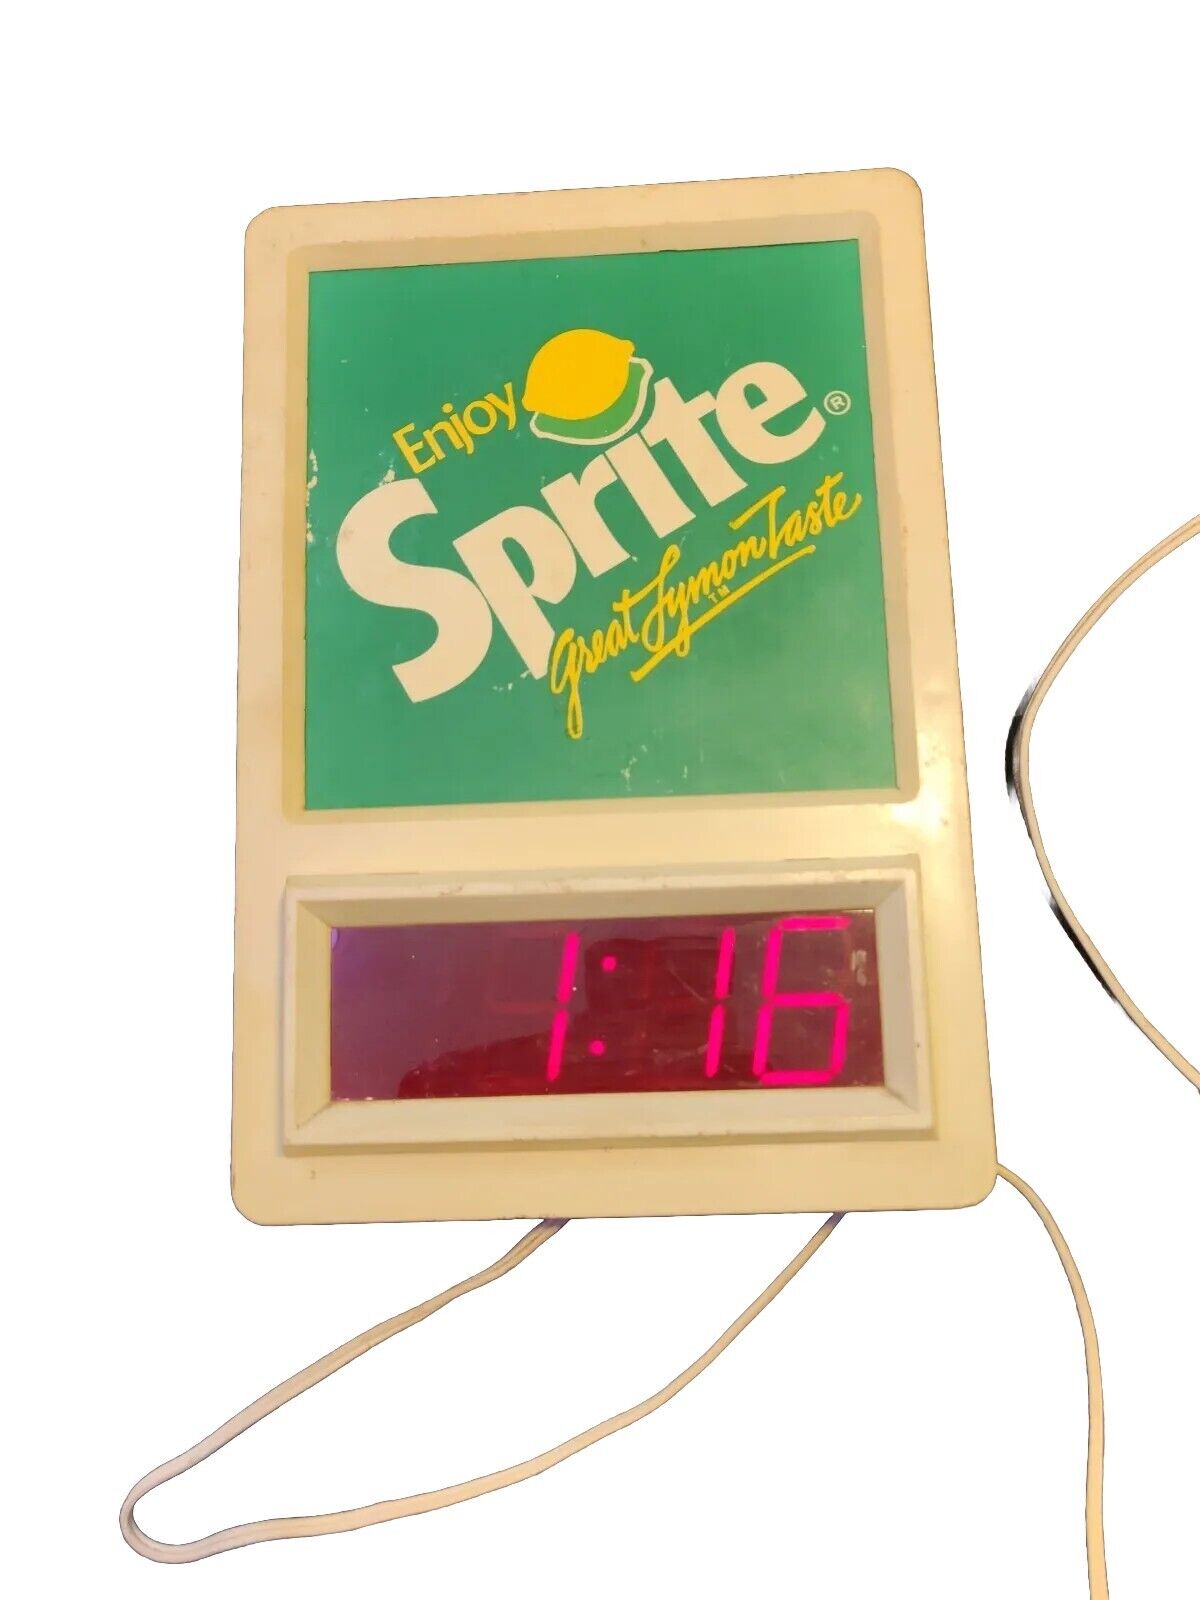 SPRITE Enjoy Soda Pop Digital Wall Clock - SIGN, Vintage Advertising - WORKS